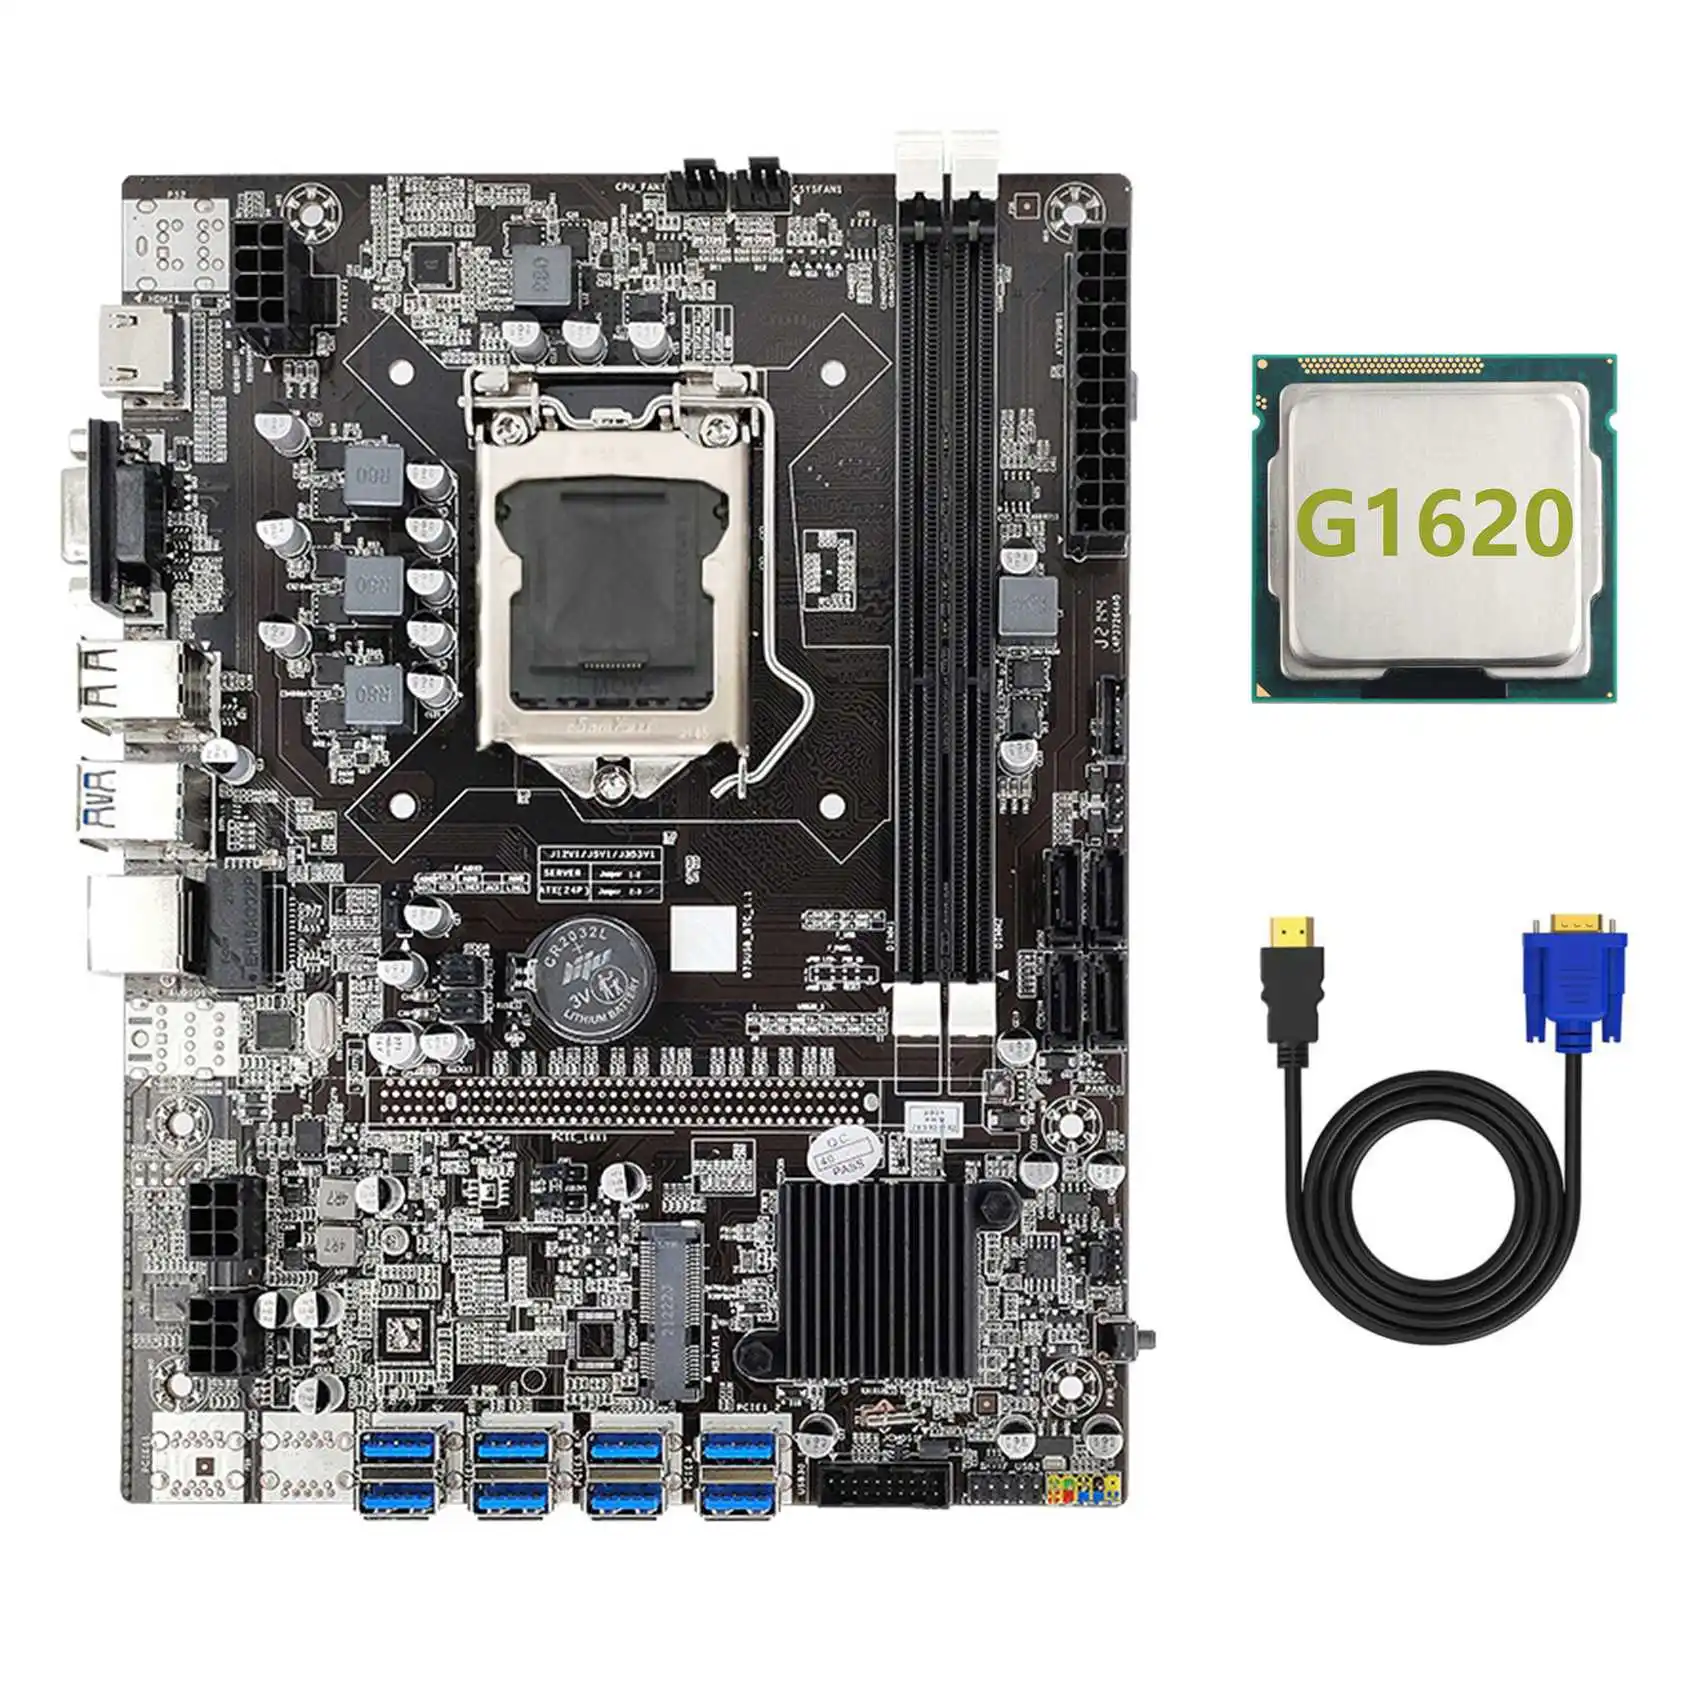 B75 ETH Mining Motherboard 8XPCIE USB Adapter+G1620 CPU+HD to VGA Cable LGA1155 MSATA DDR3 B75 USB Miner Motherboard